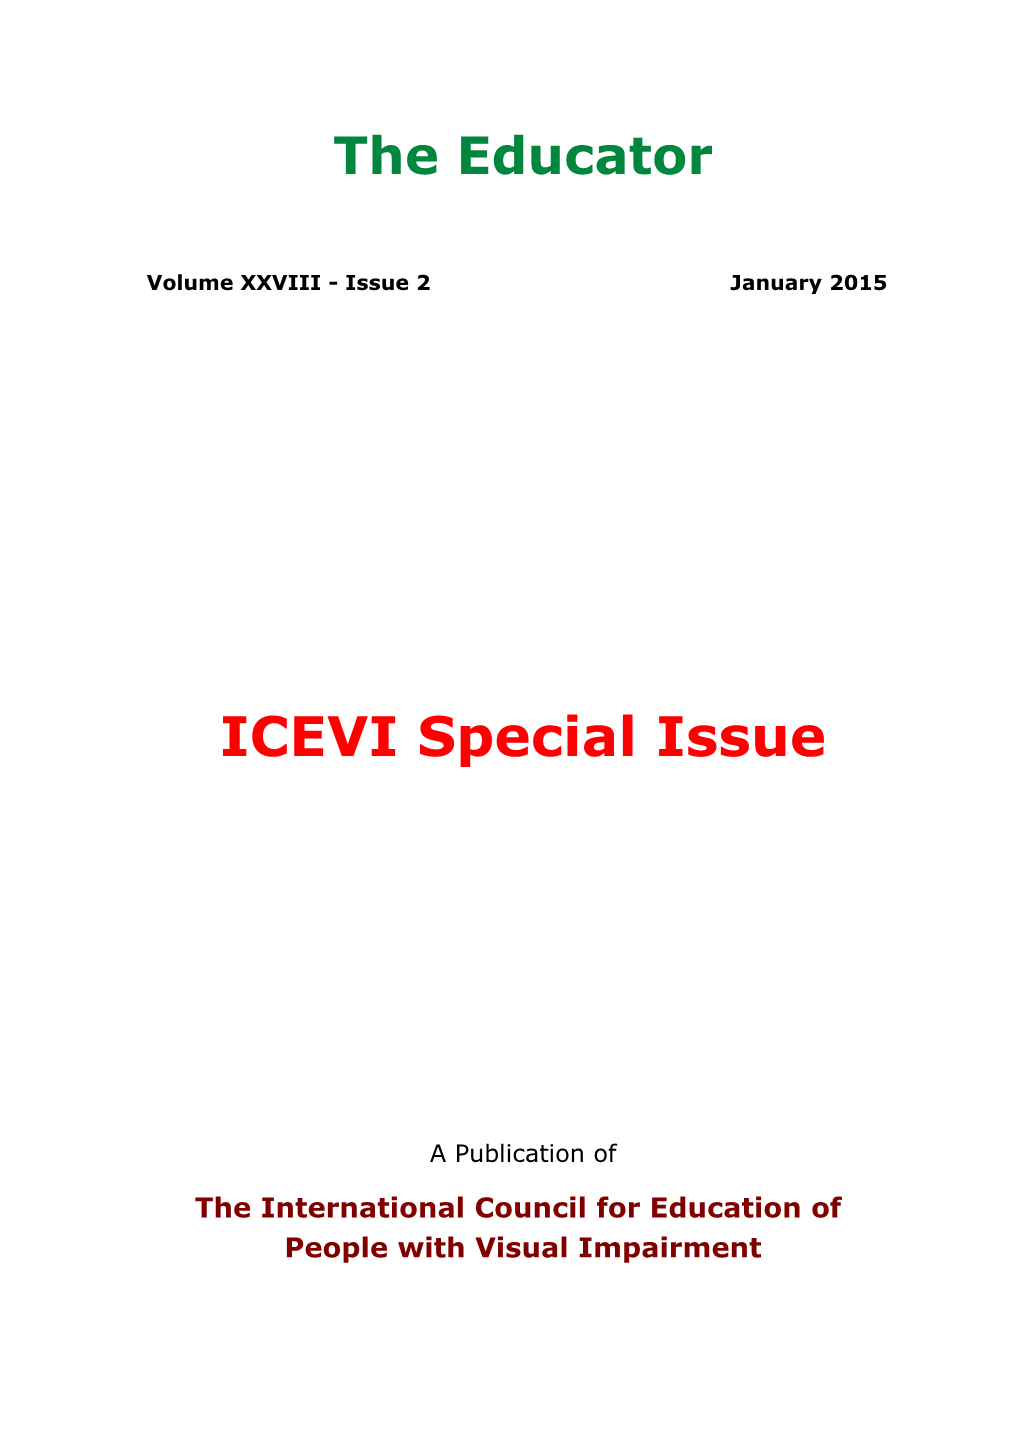 Volume XXVIII-Issue 2January 2015